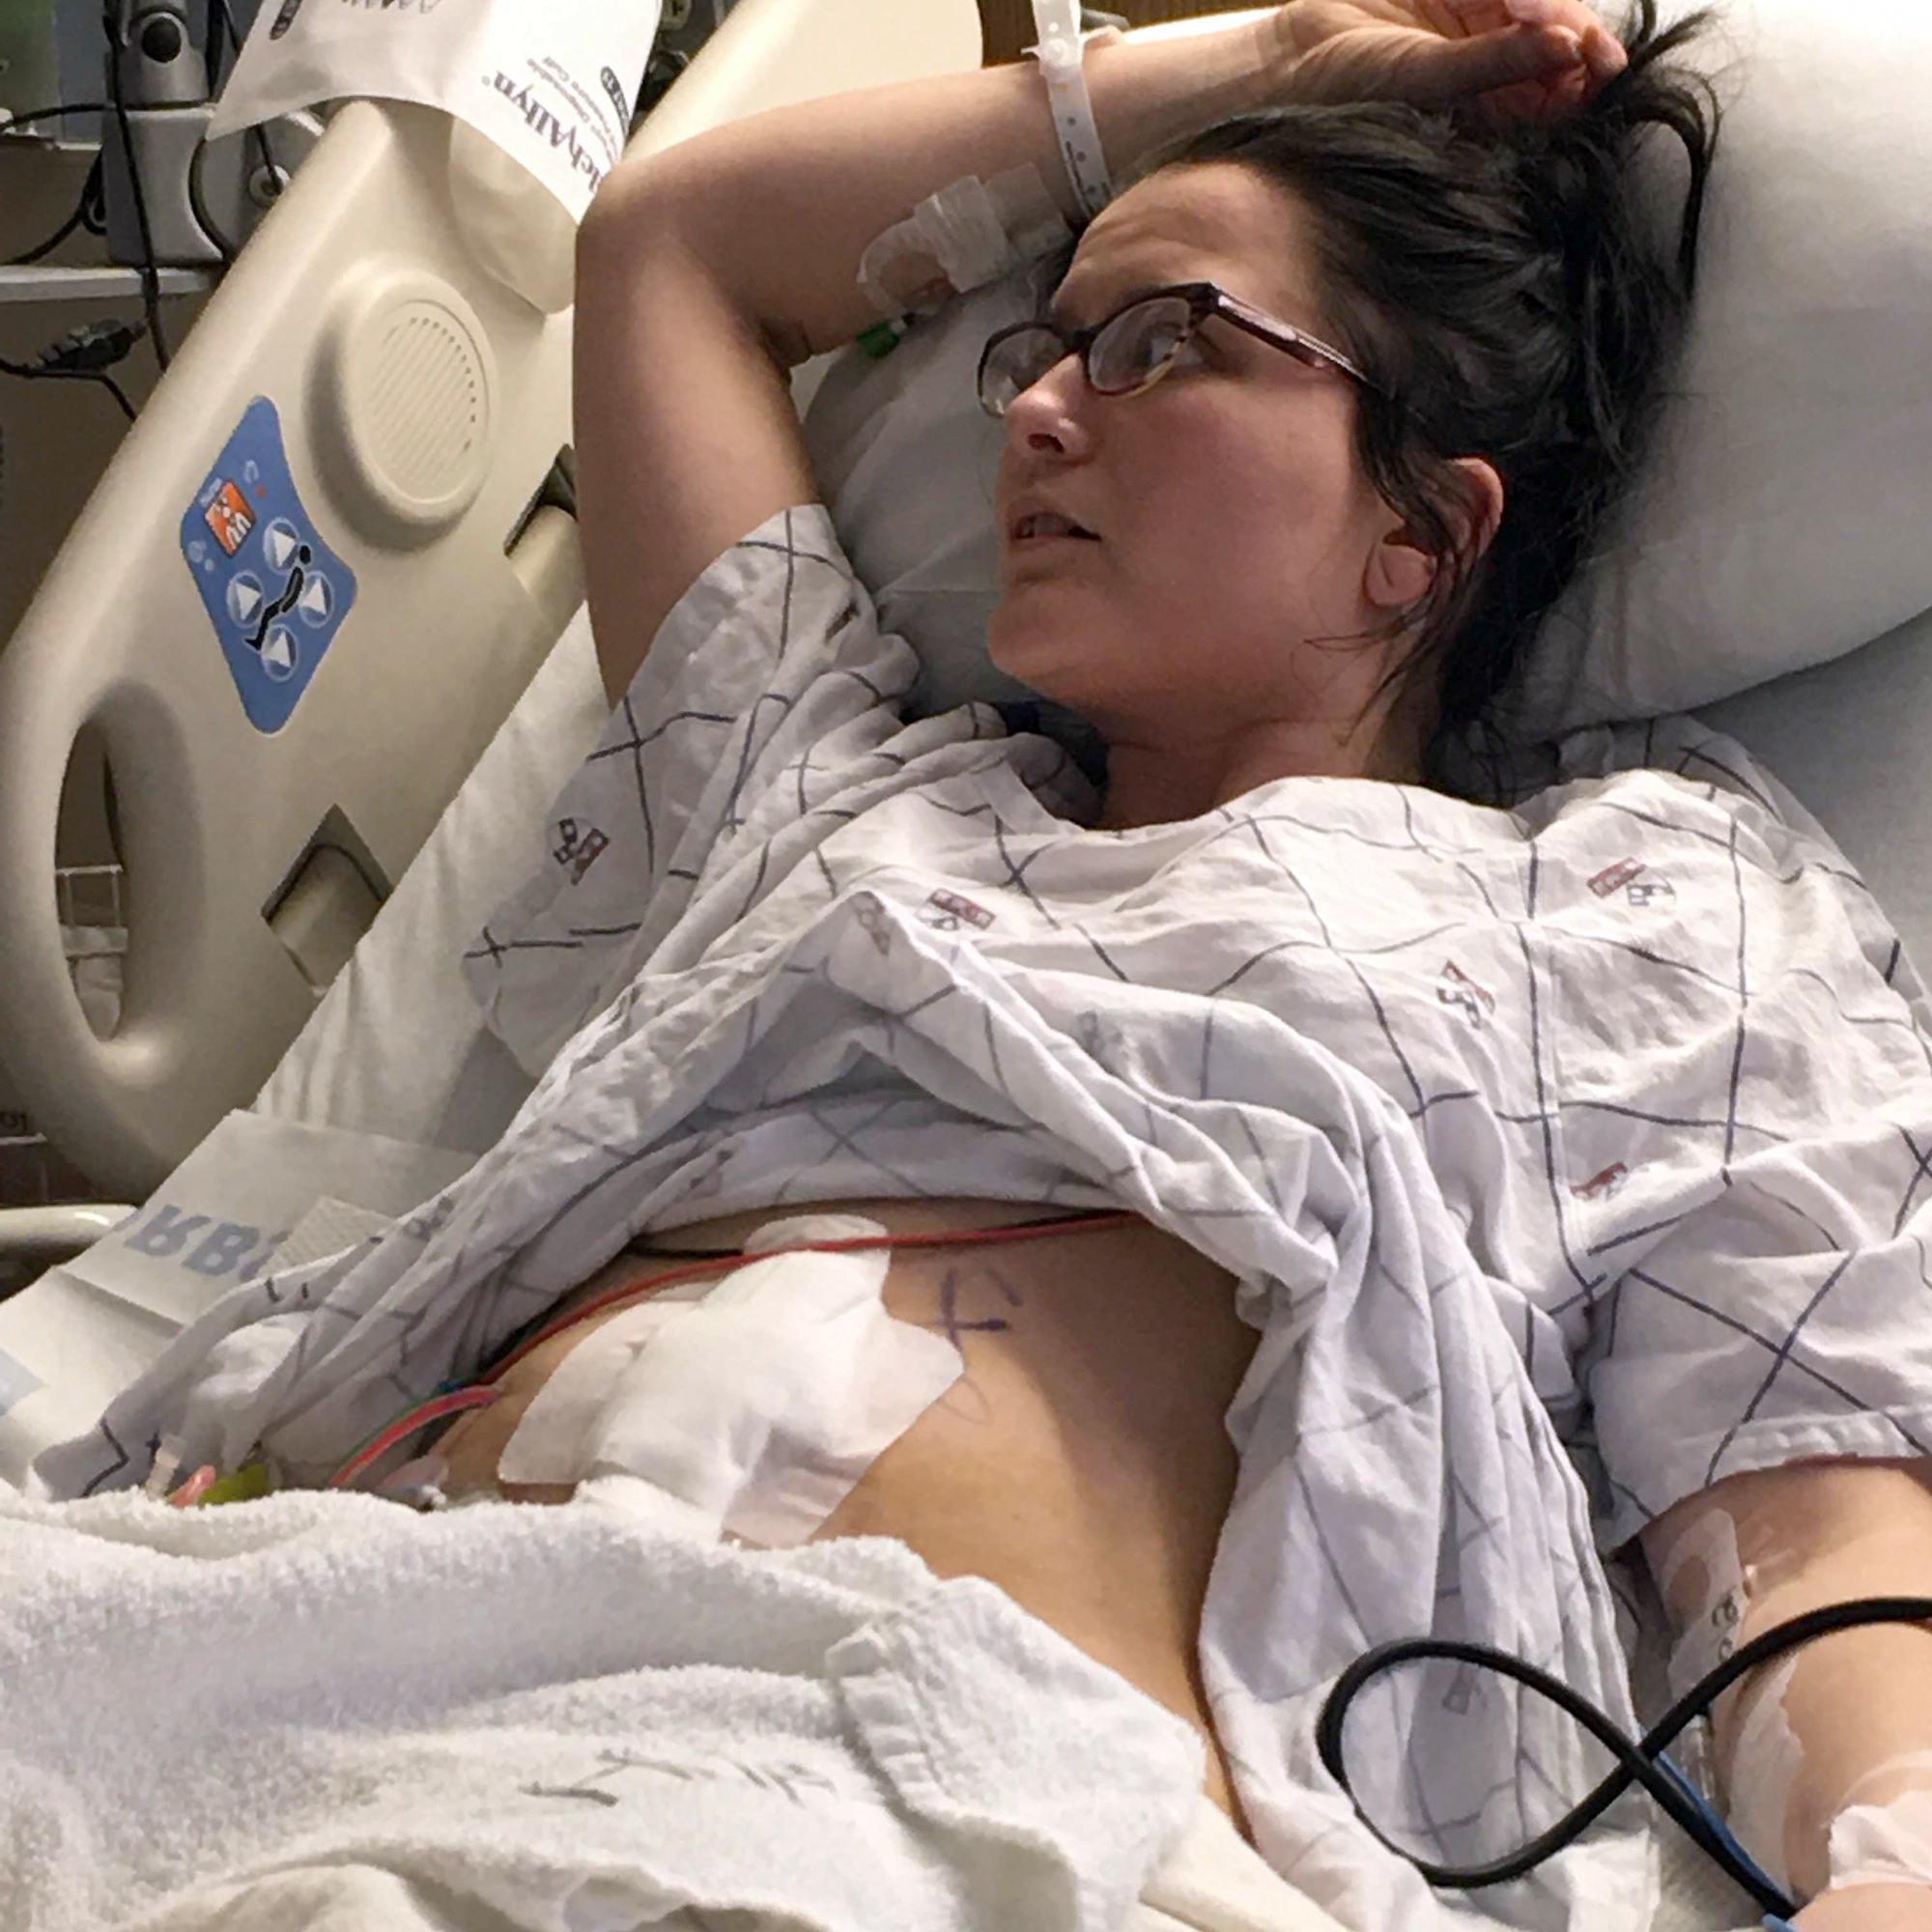 Chelsea Jovanovich at uterine transplant surgery